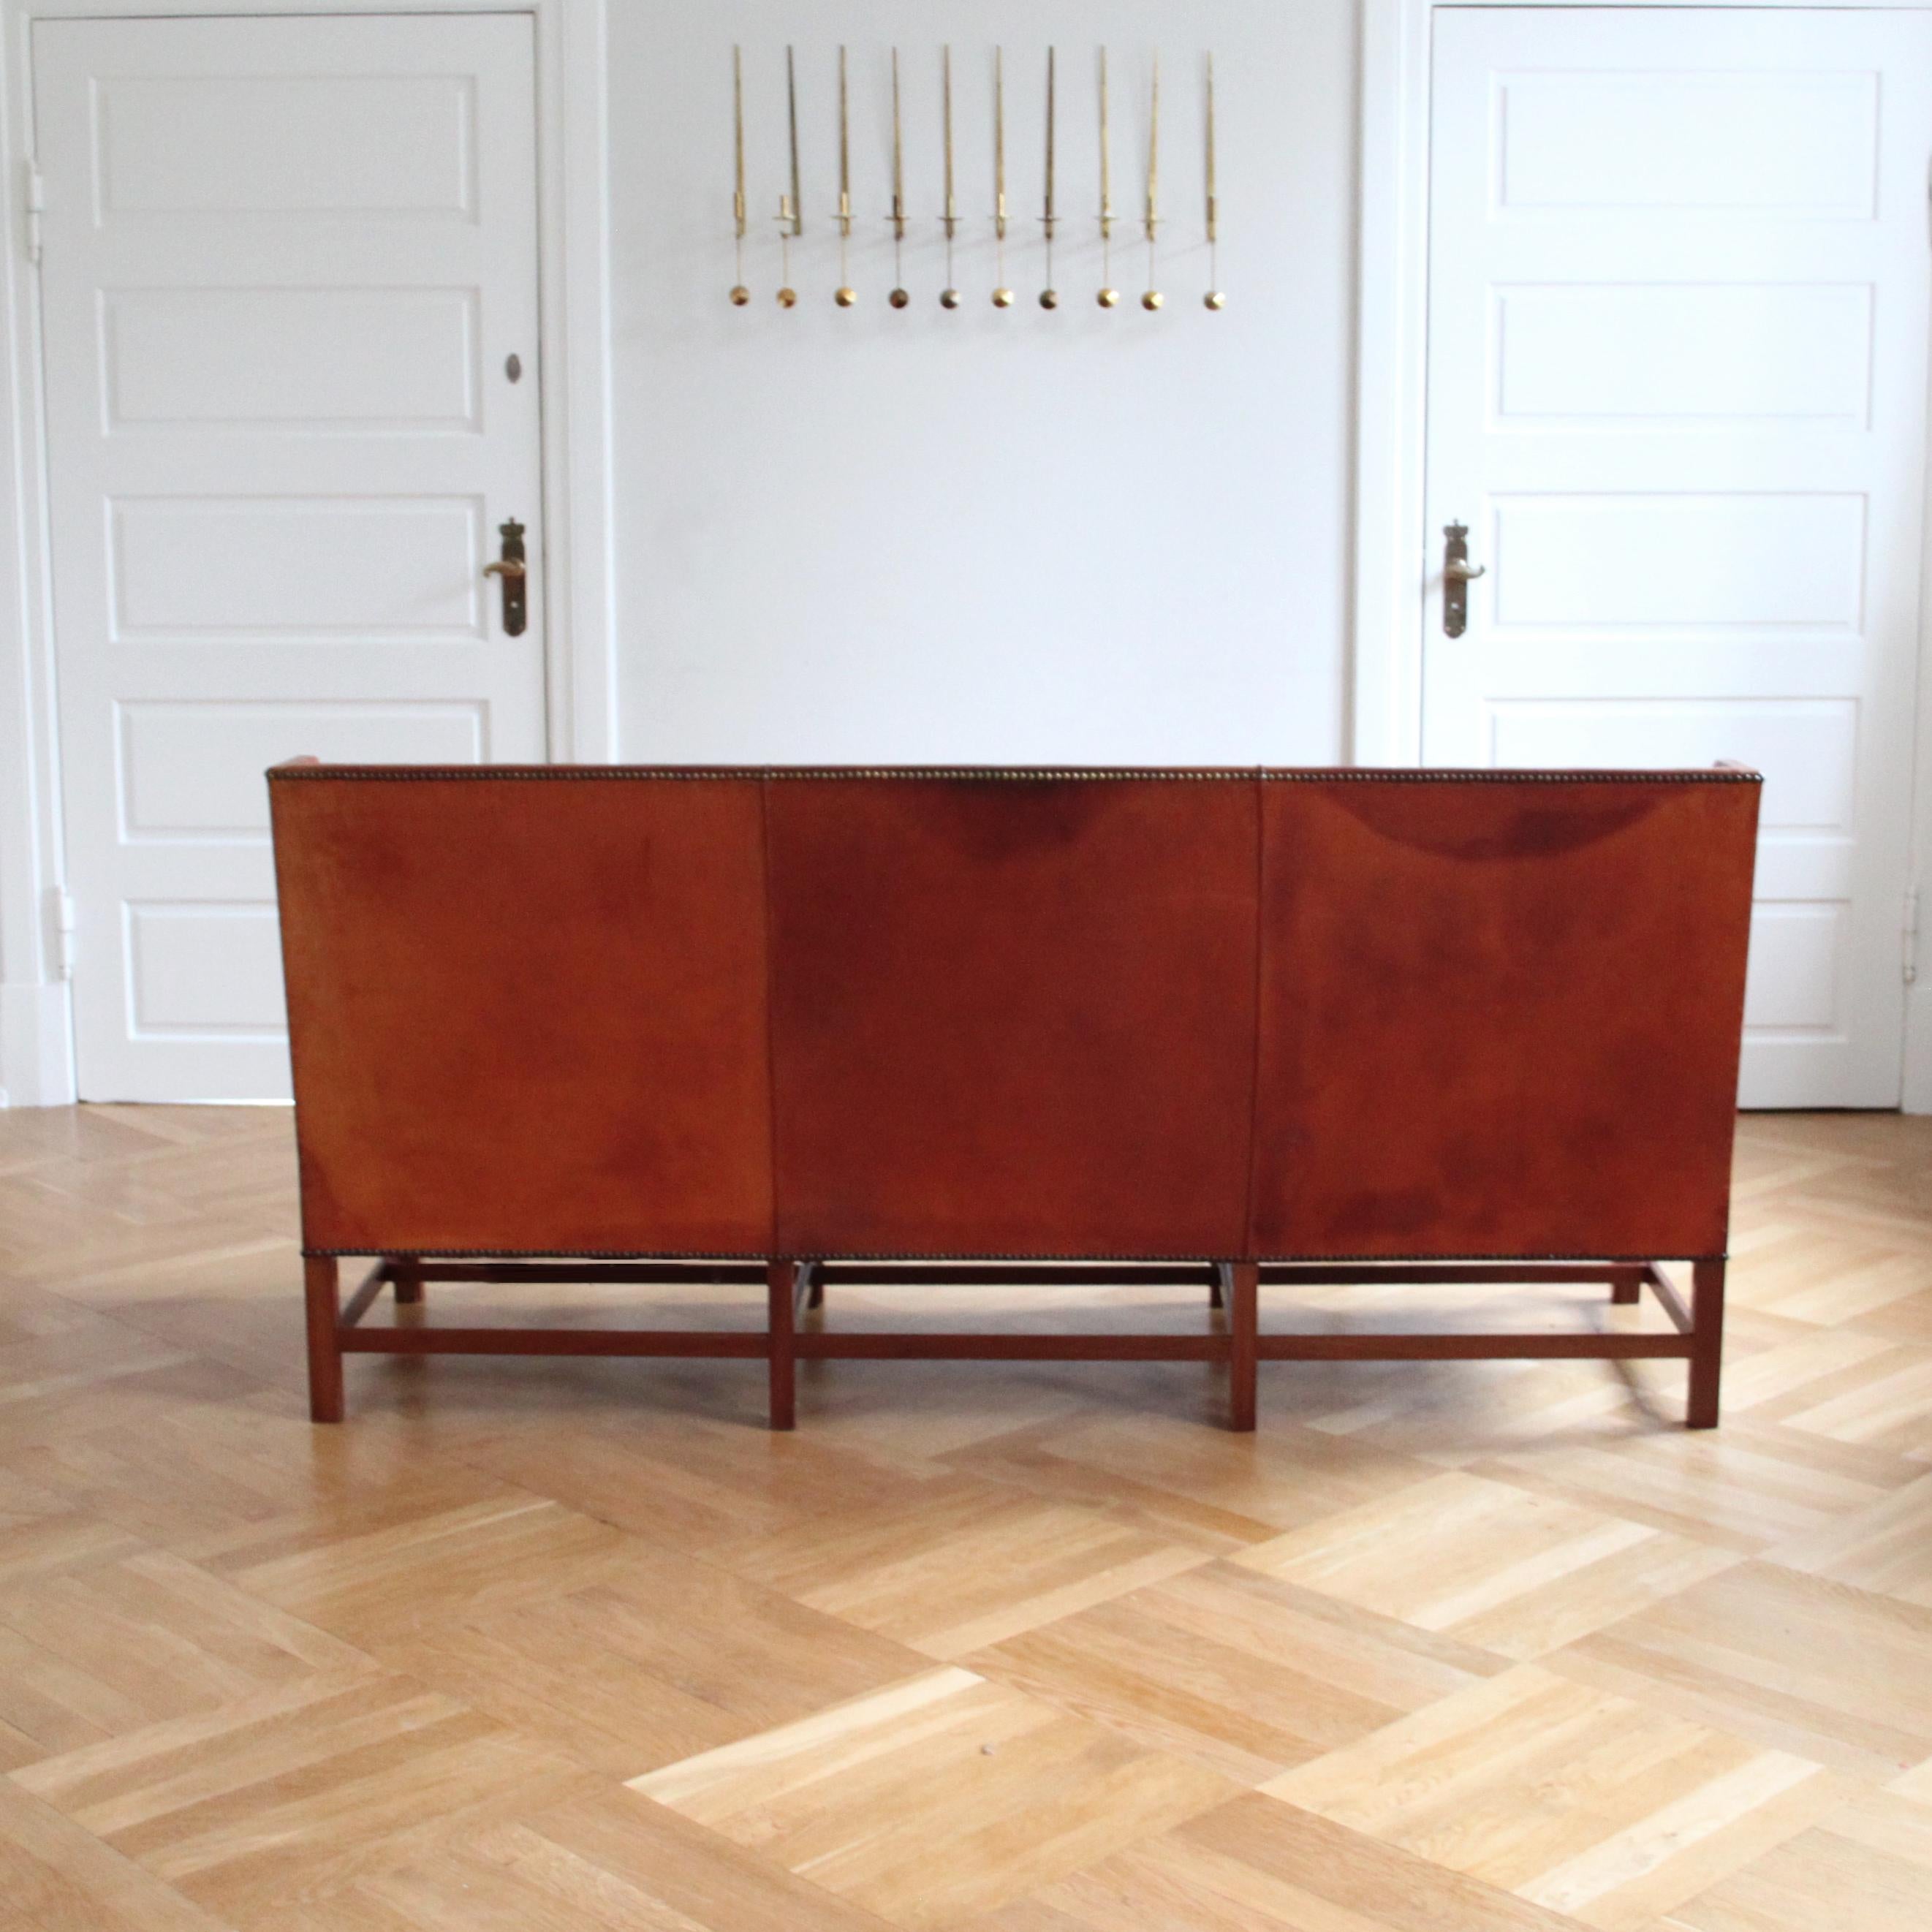 Mahogany Kaare Klint Sofa Model 5011 Original Niger Leather 1930s, Scandinavian Modern For Sale